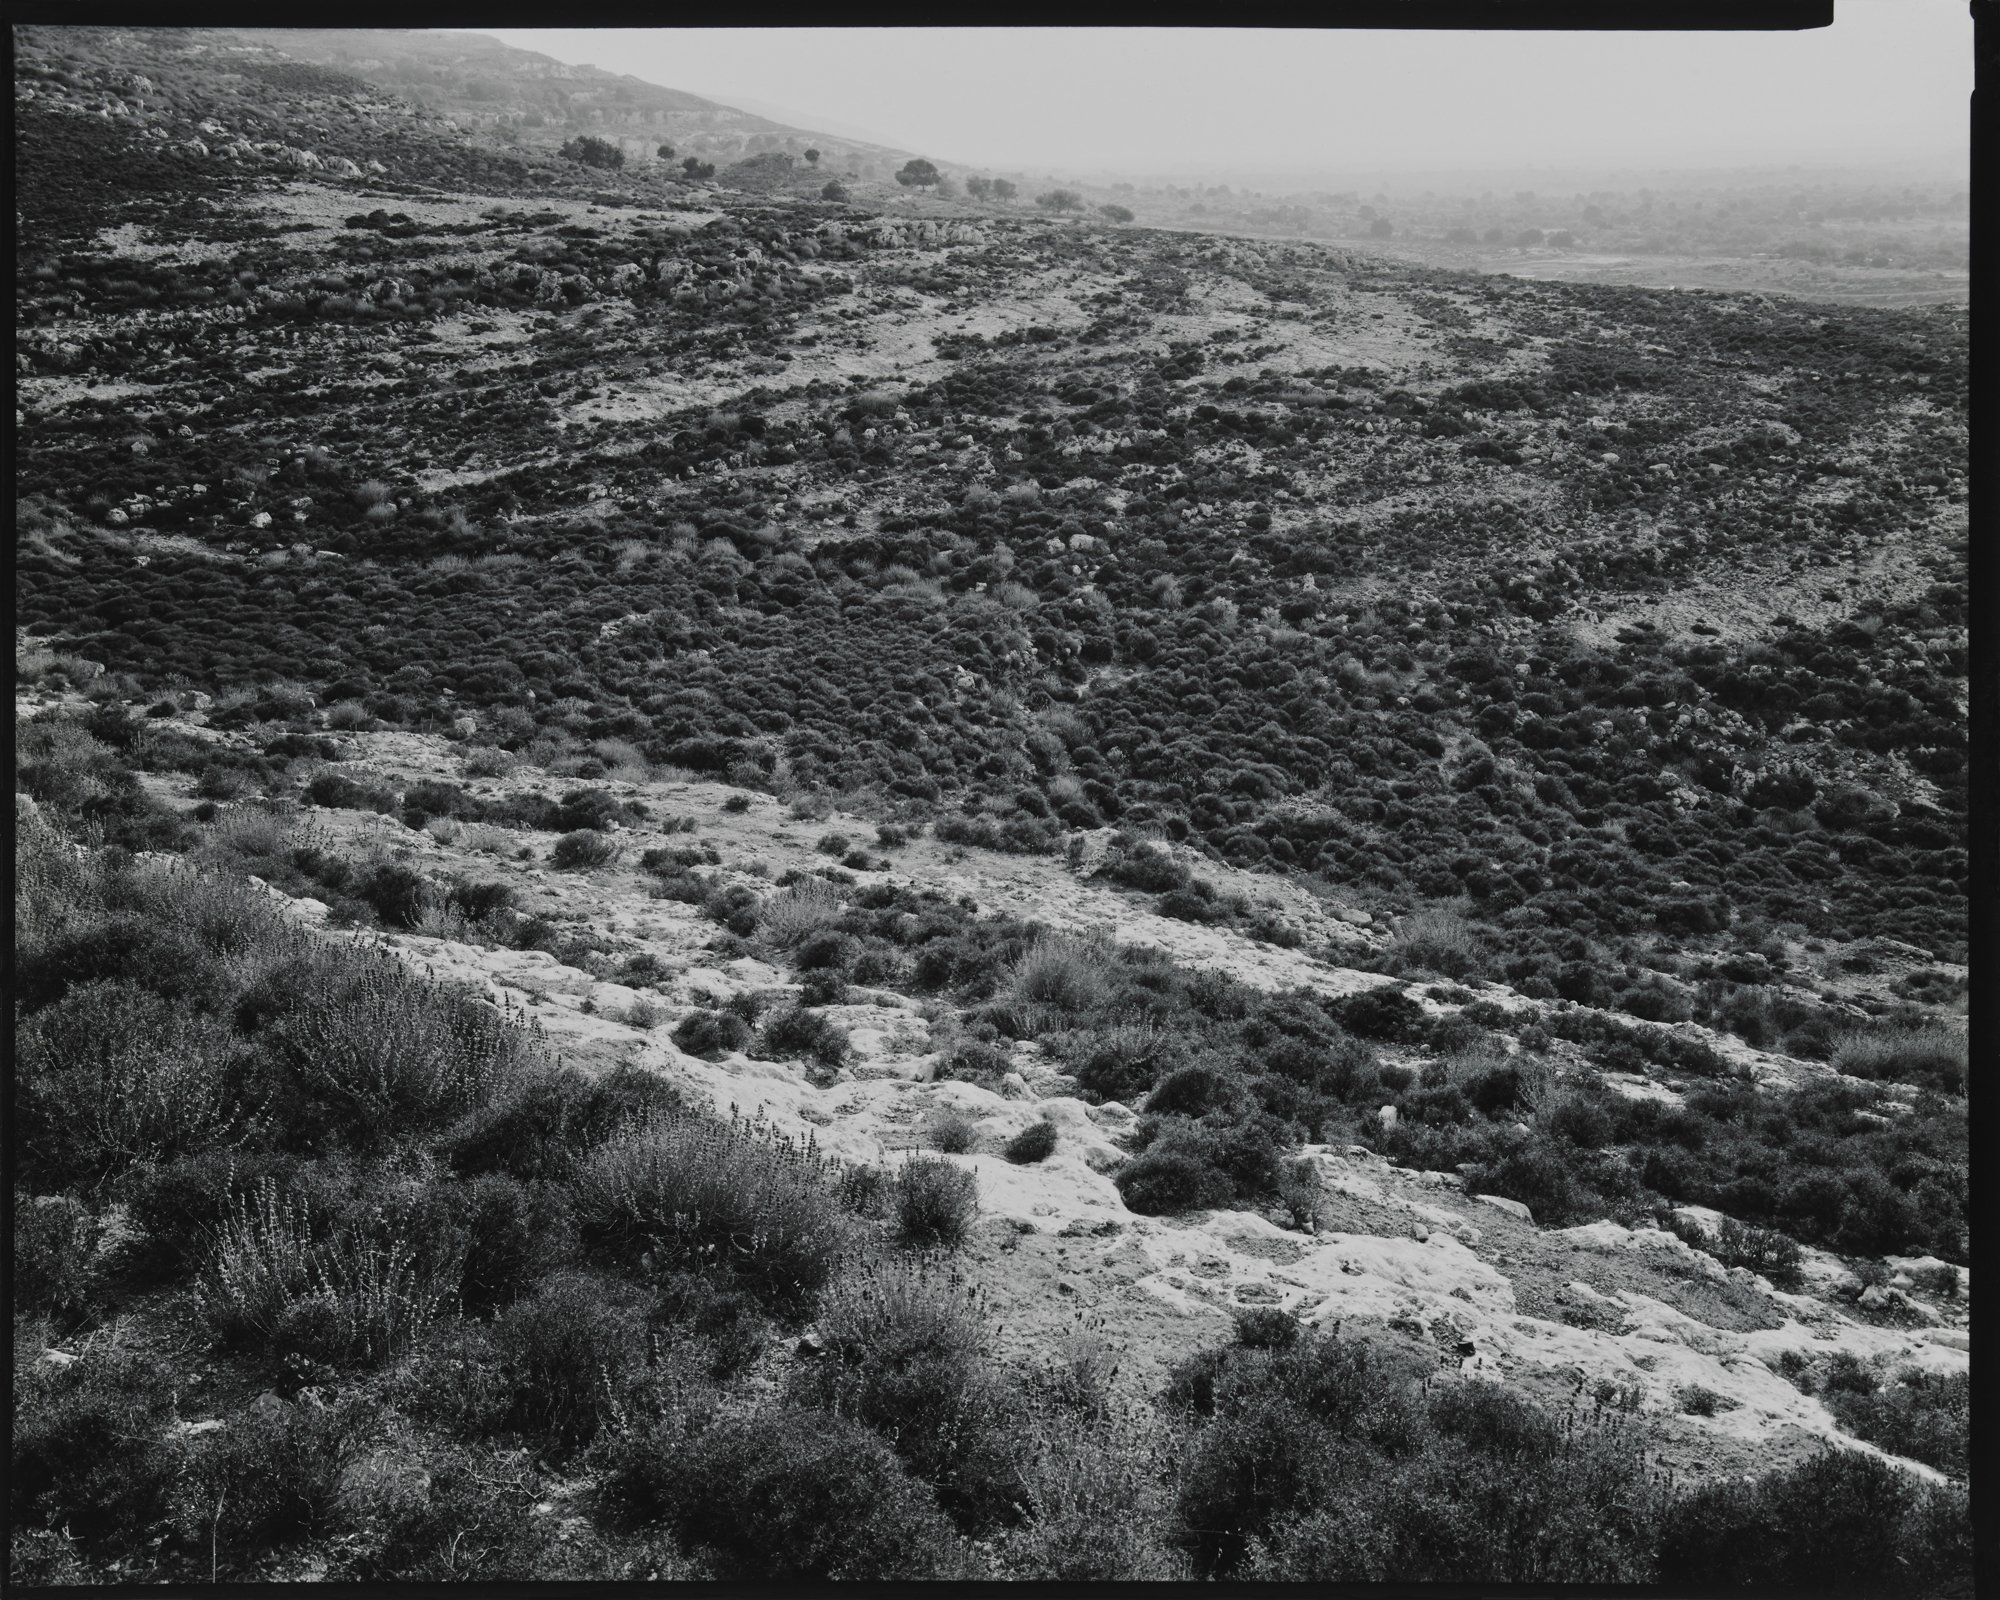 Cyrenaican Landscapes_Cyrene Landscape, Shahat, Libya_1979 © Nick Merrick.jpg